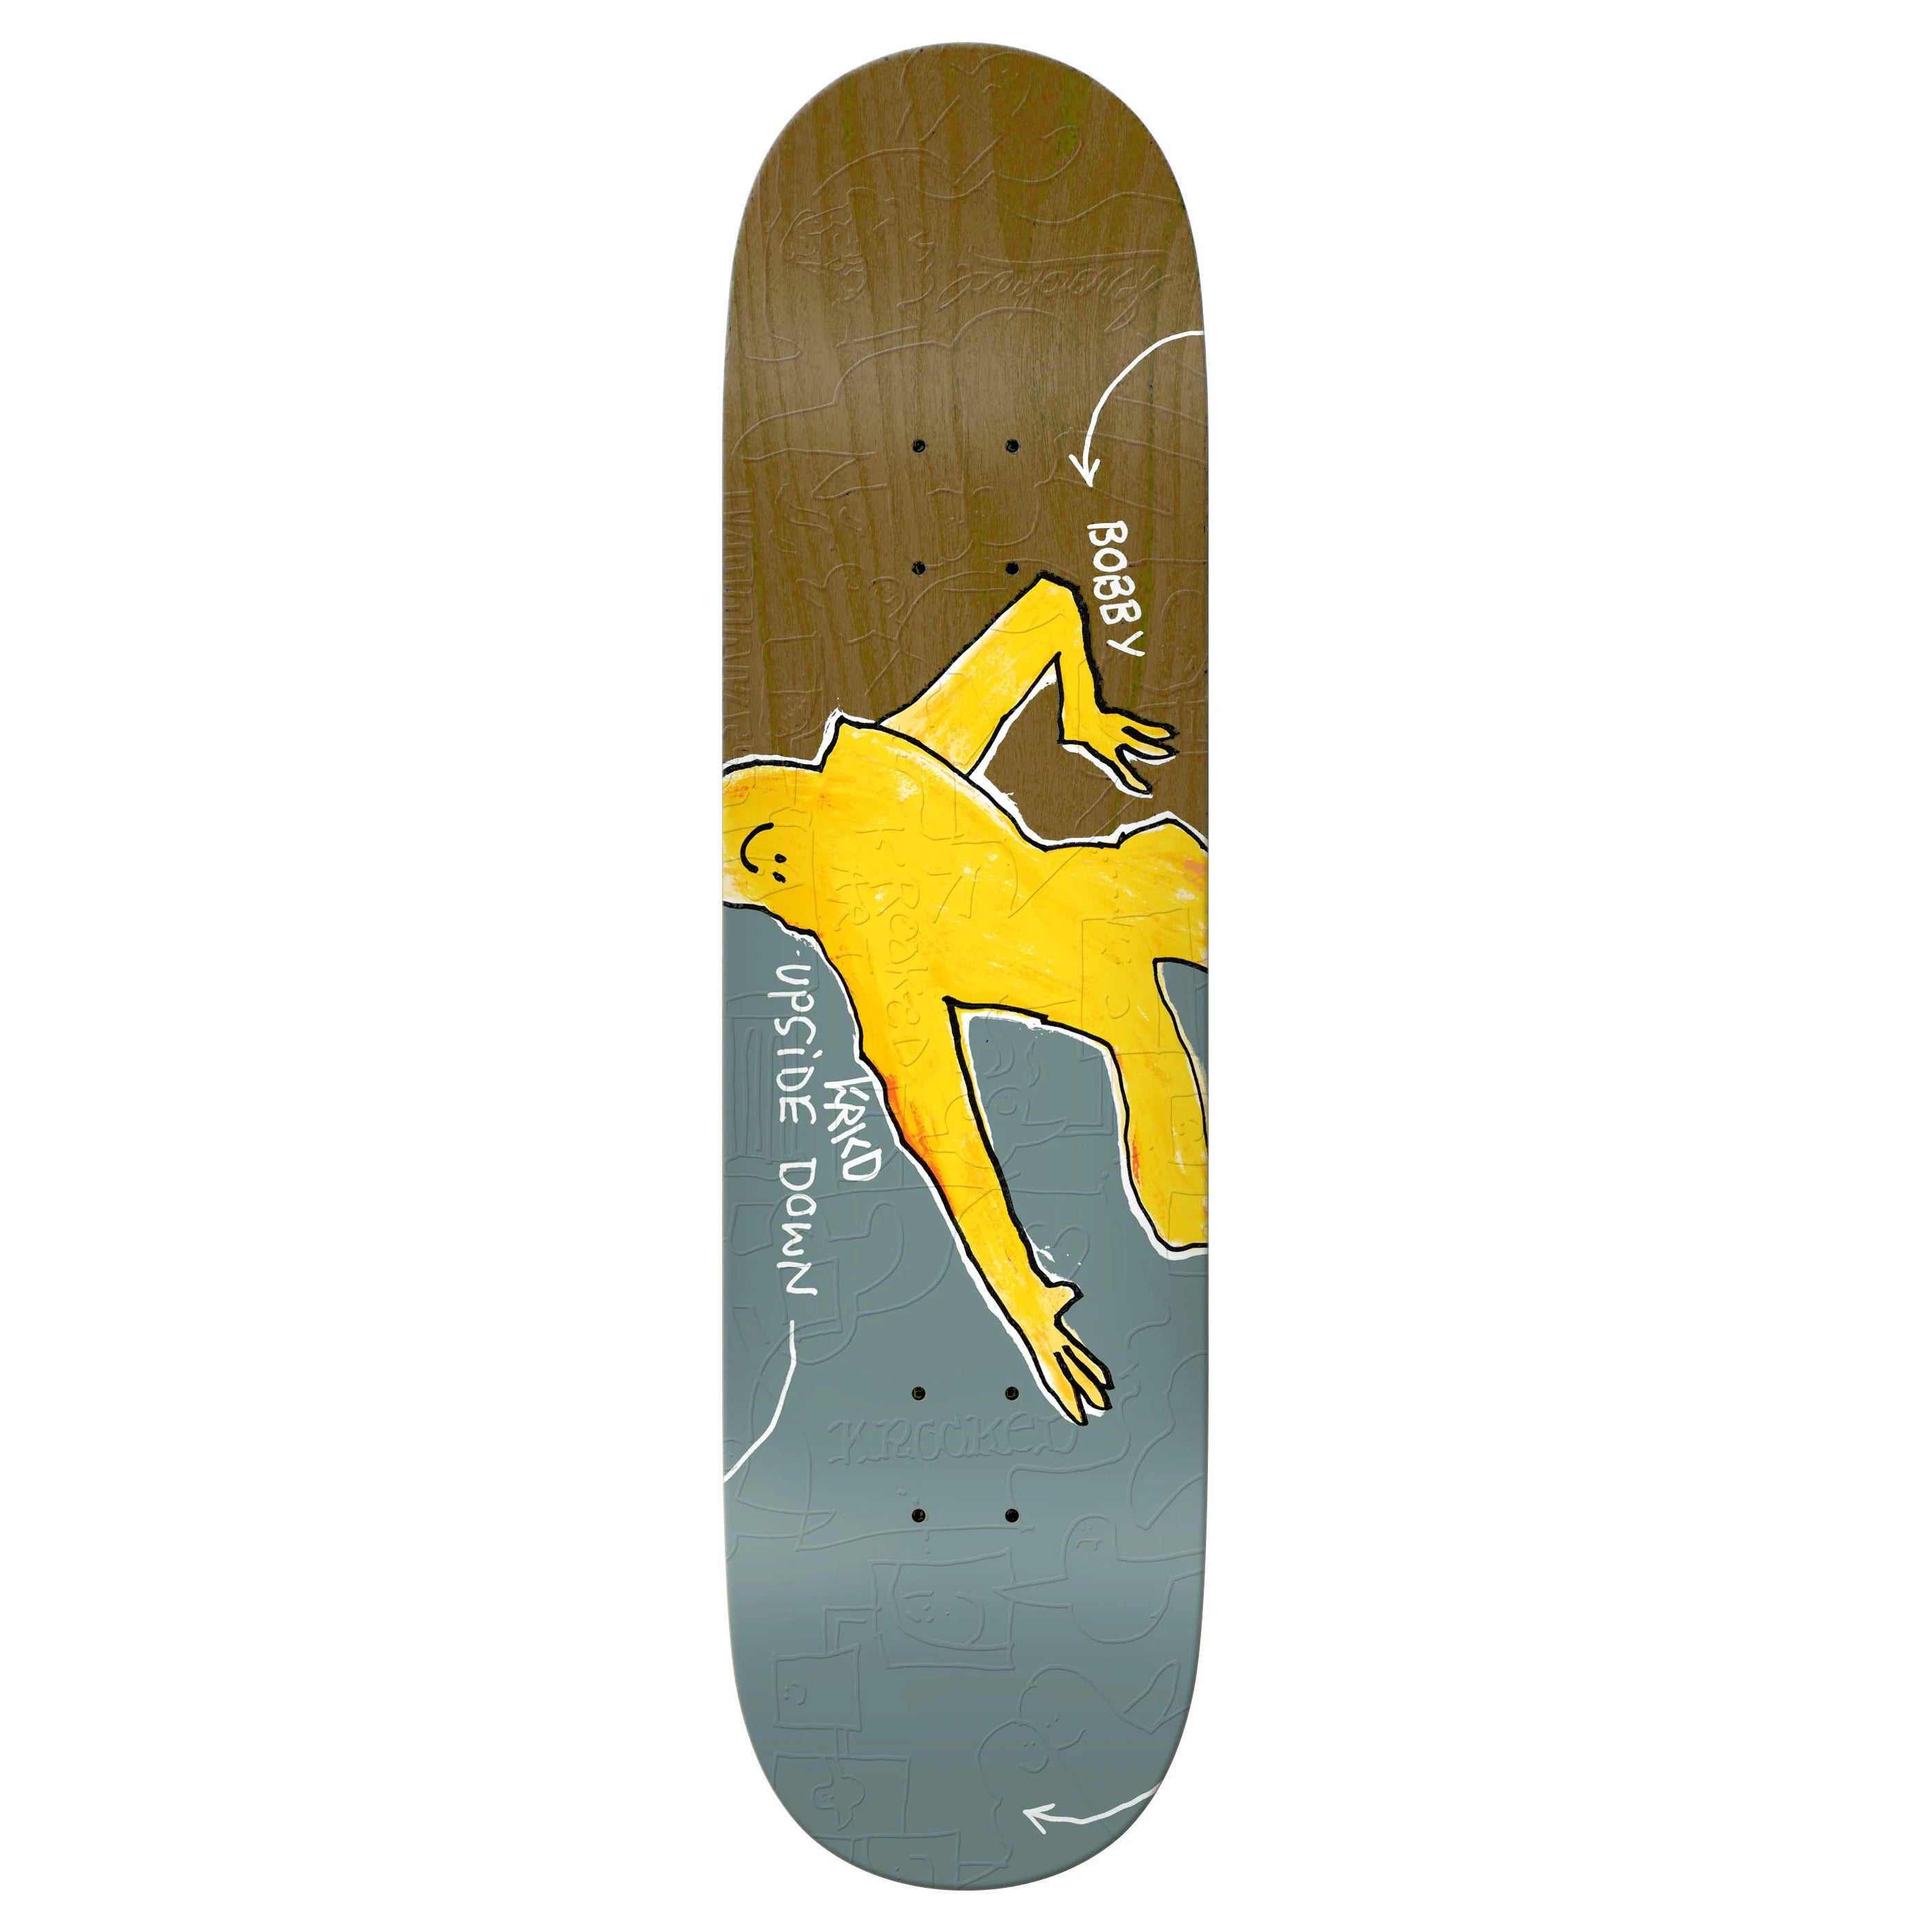 Upside Down Bobby Worrest Krooked Skateboard Deck